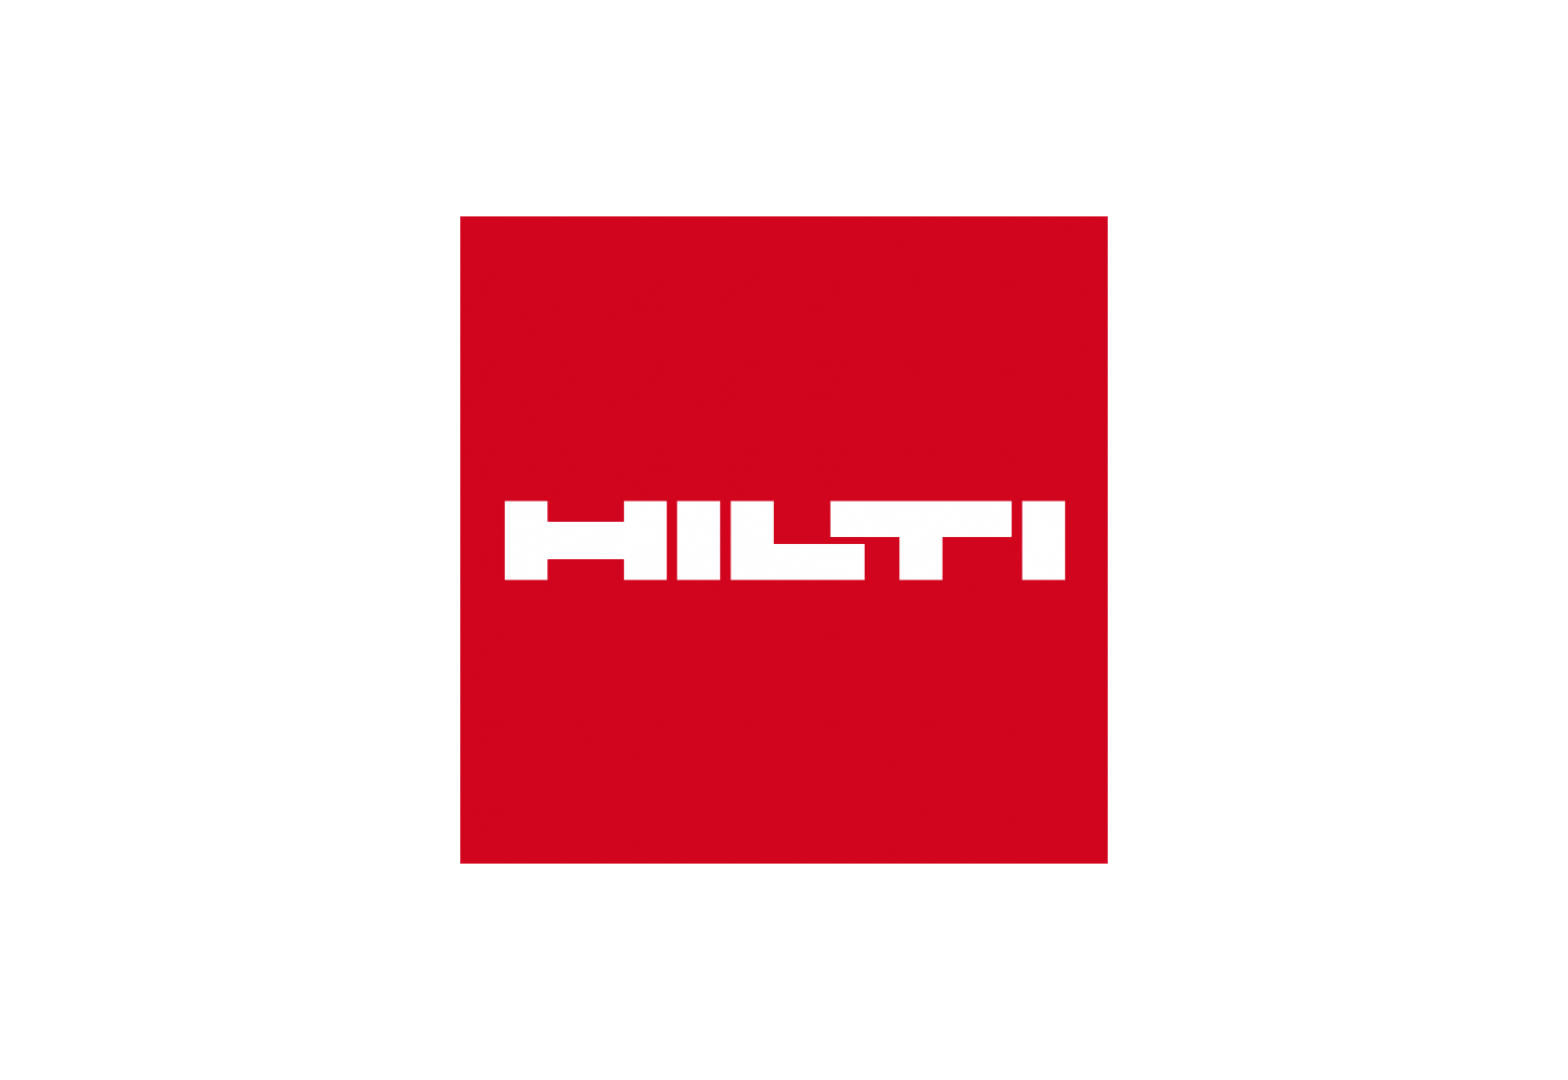 hilti_1550px-hilti_logo_2021-02-05_223355.png - Thumb Gallery Image of HILTI